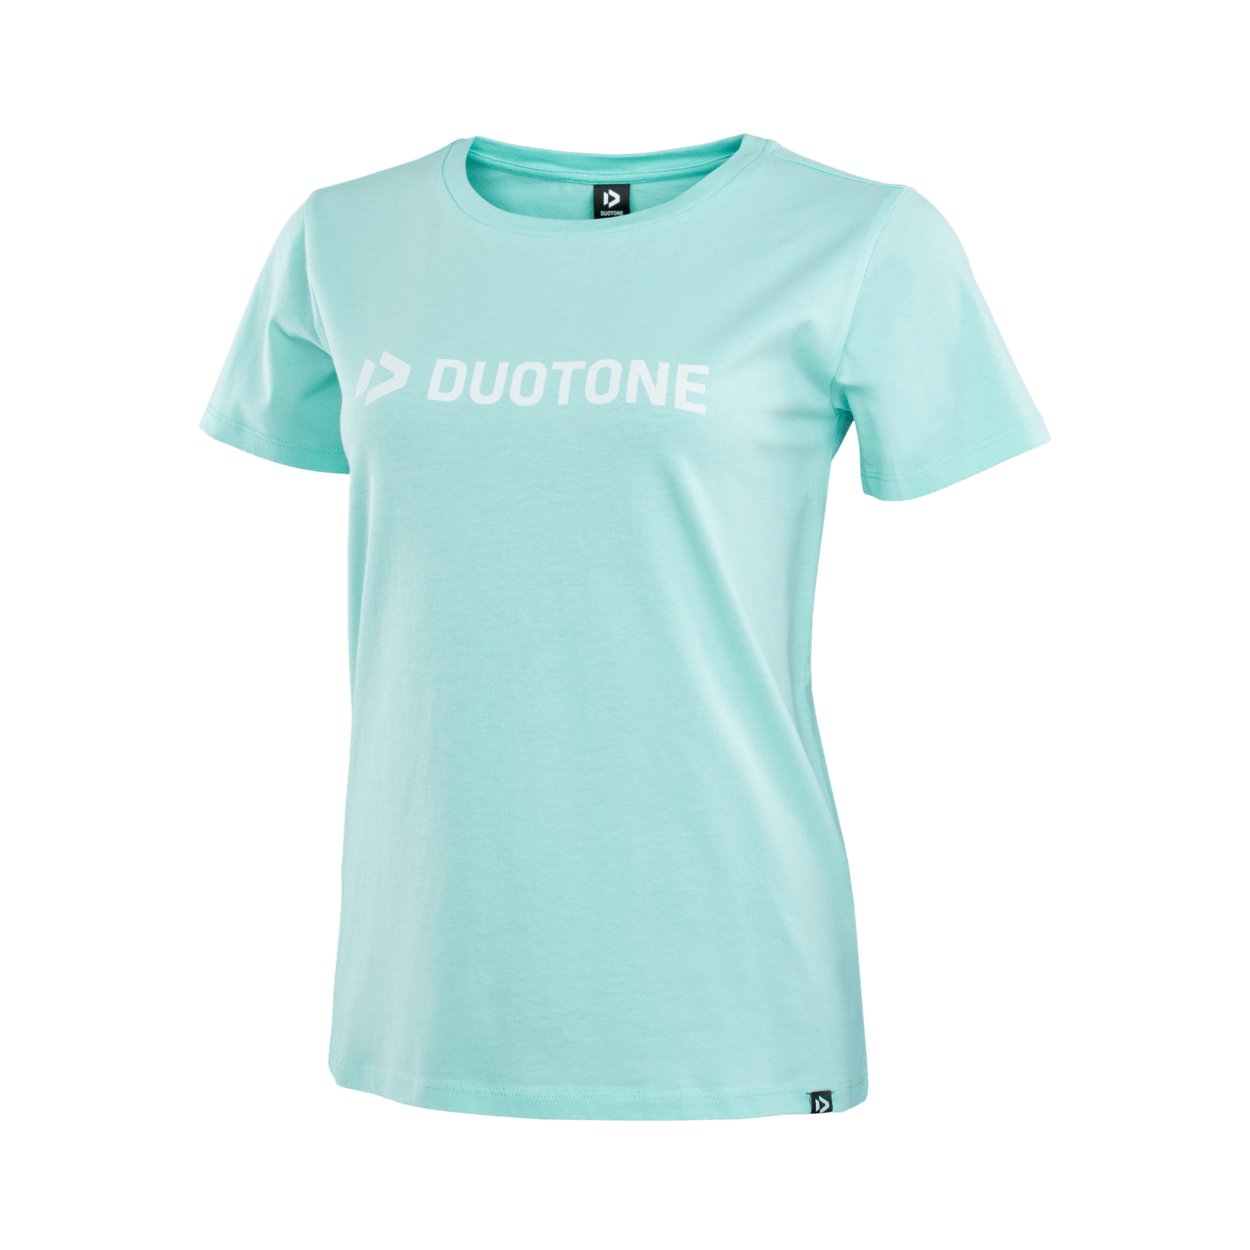 Duotone Shirt Original SS 2022 - Worthing Watersports - 9008415987764 - Apparel - Duotone Kiteboarding